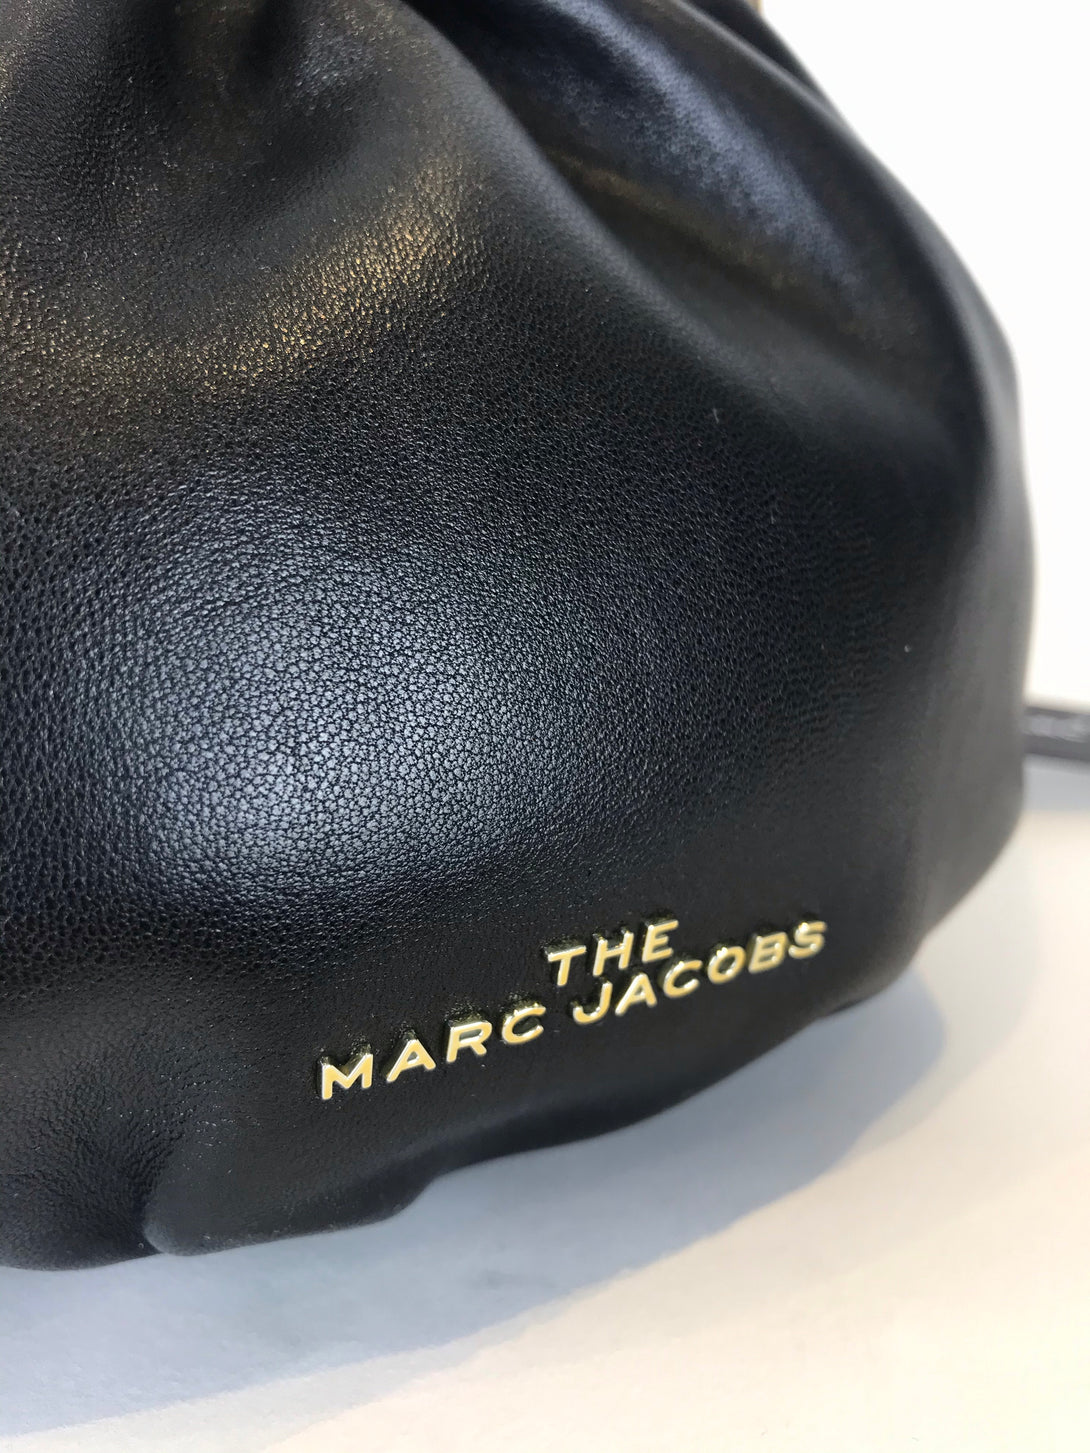 Marc Jacobs Black Leather "The Soiree" Mini Shoulder Bag - As Seen On Instagram 06/09/2020 - Siopaella Designer Exchange